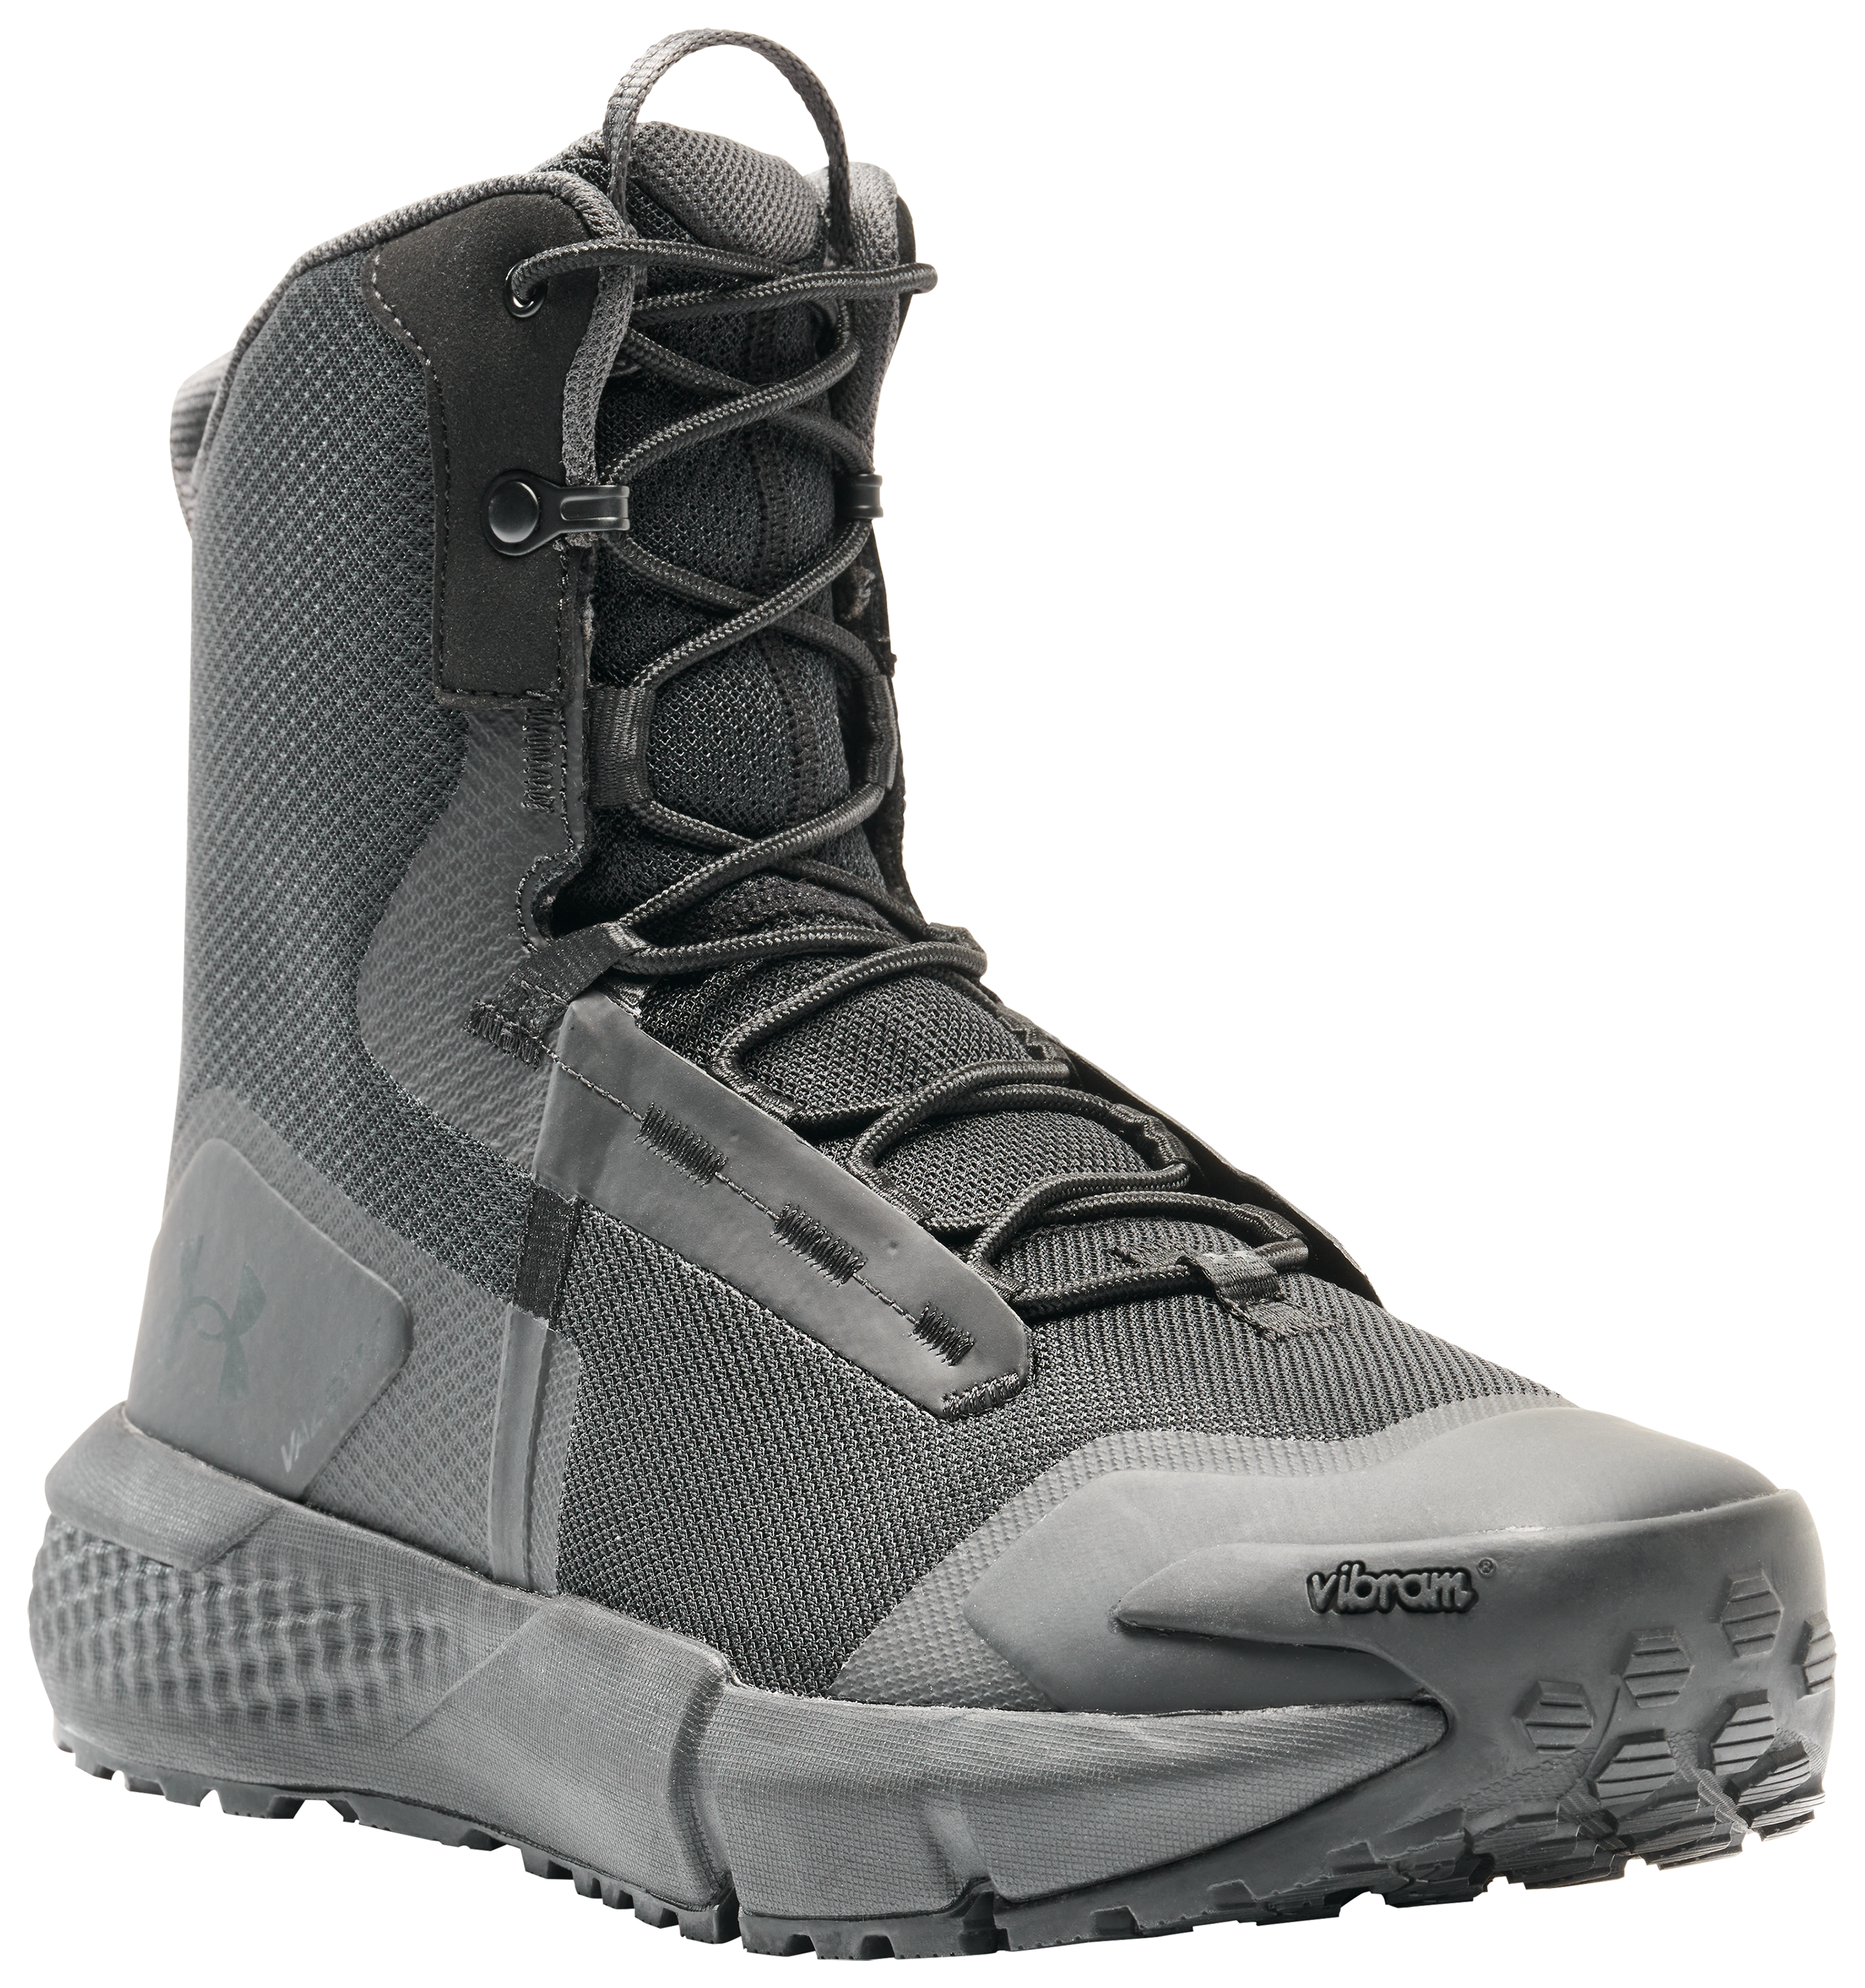 Under Armour Valsetz Side Zip Tactical Boots for Men - Black - 10.5M